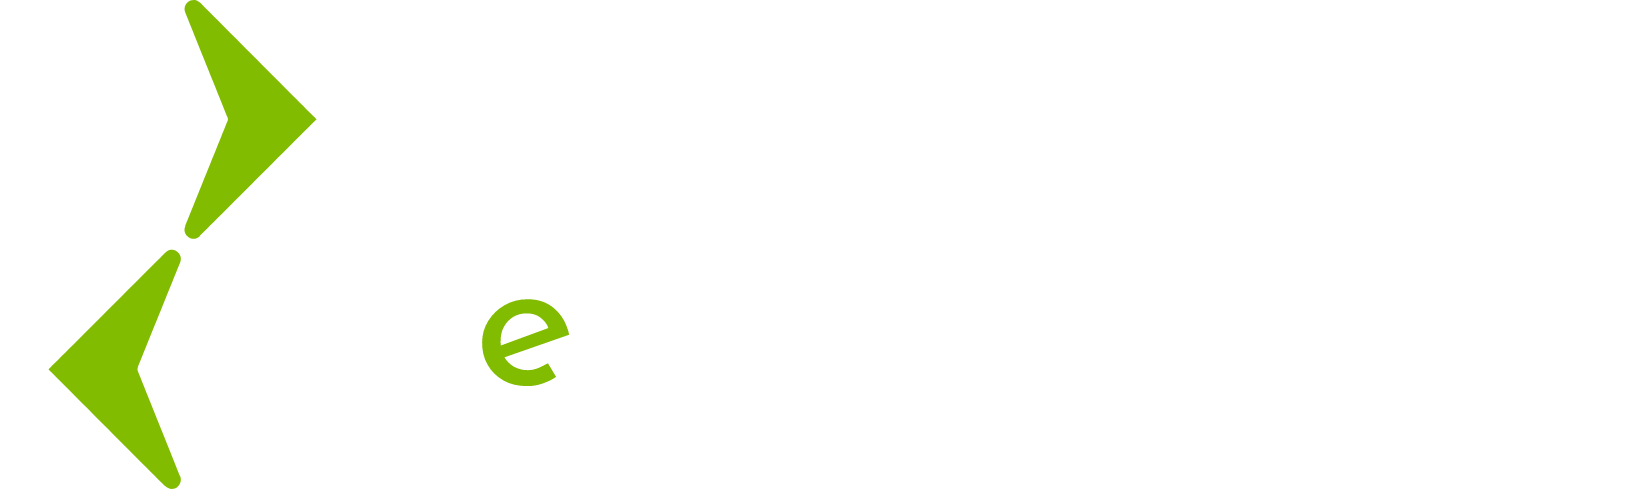 Lightning eMotors logo grand pour les fonds sombres (PNG transparent)